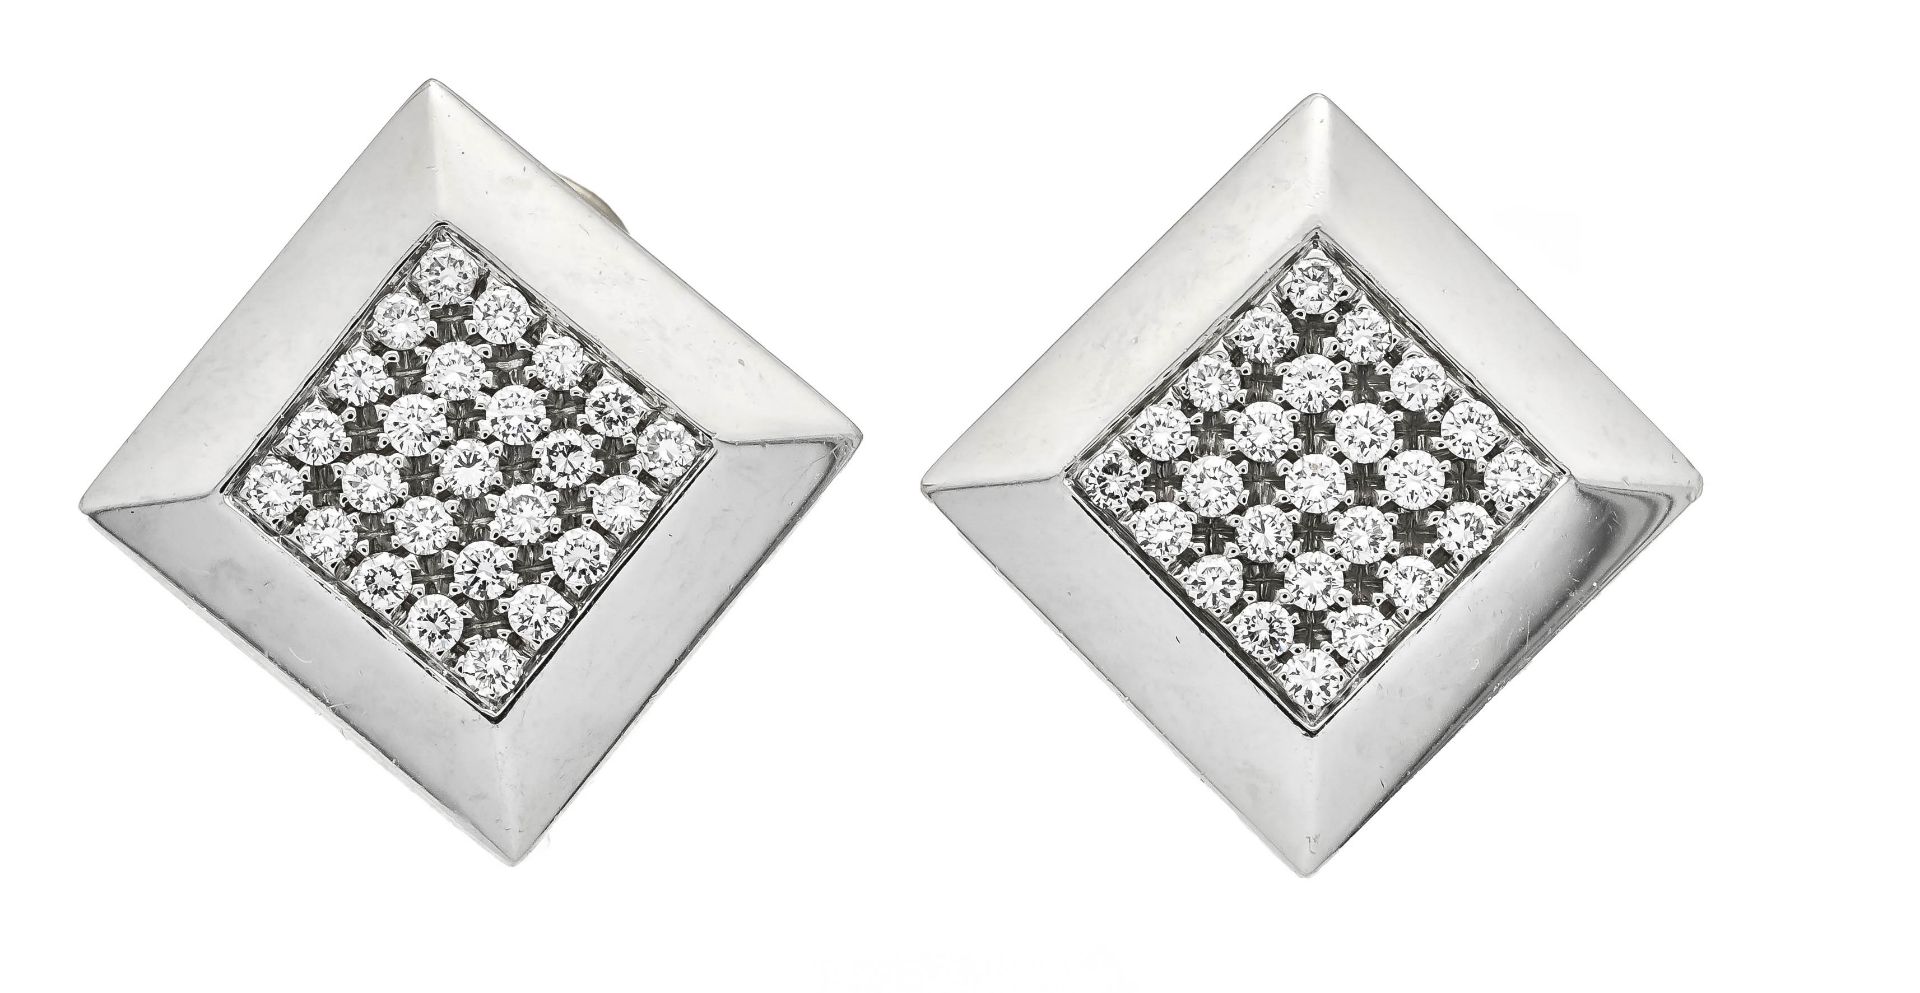 Wempe brilliant-cut diamond ear clips GG/WG 750/000, each with 25 brilliant-cut diamonds, total 0.50